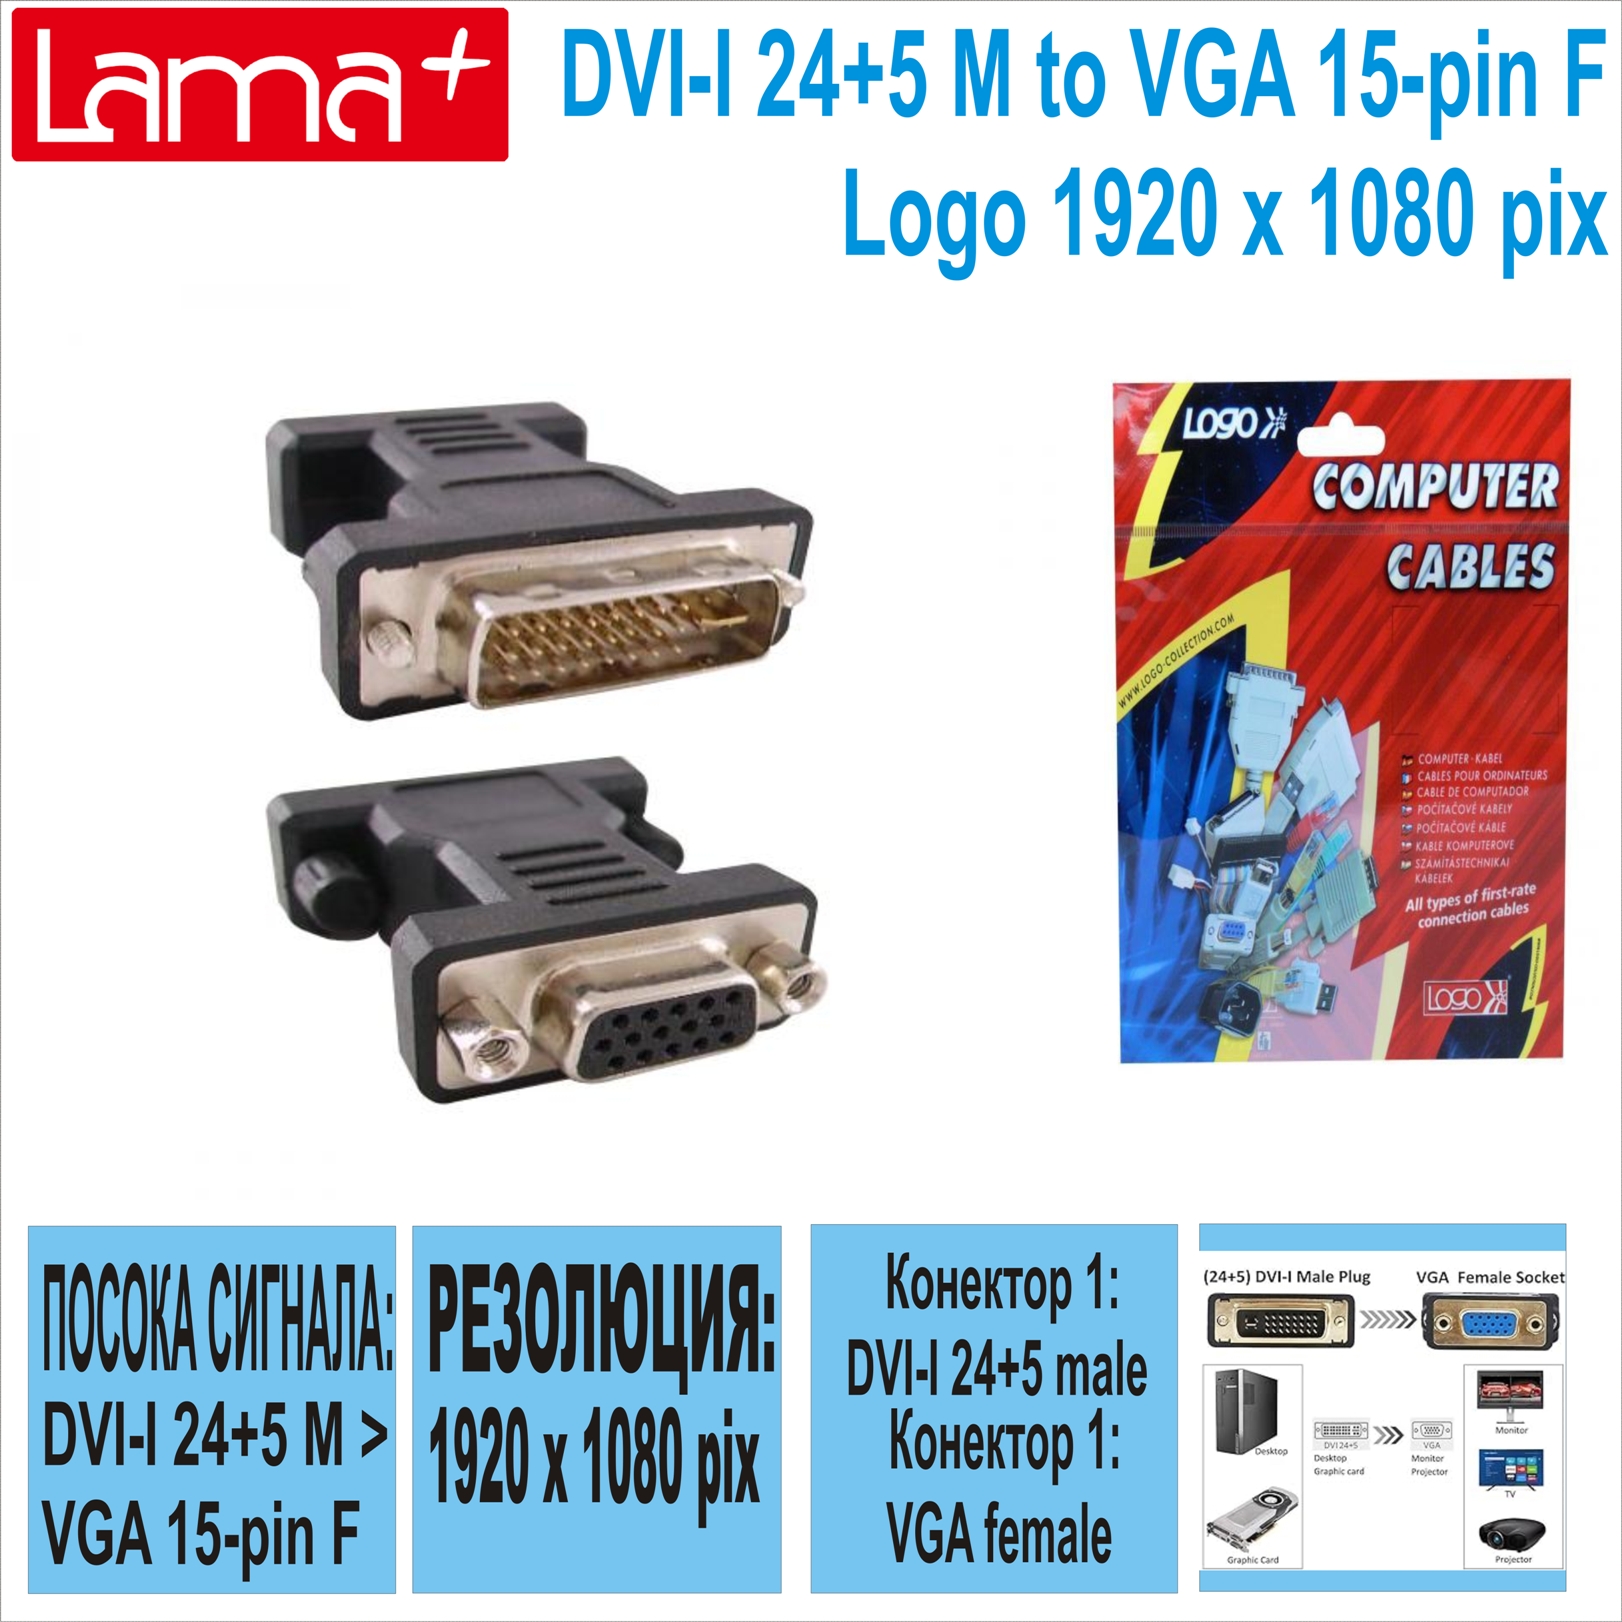 DVI-I 24+5 M to VGA 15-pin F Logo